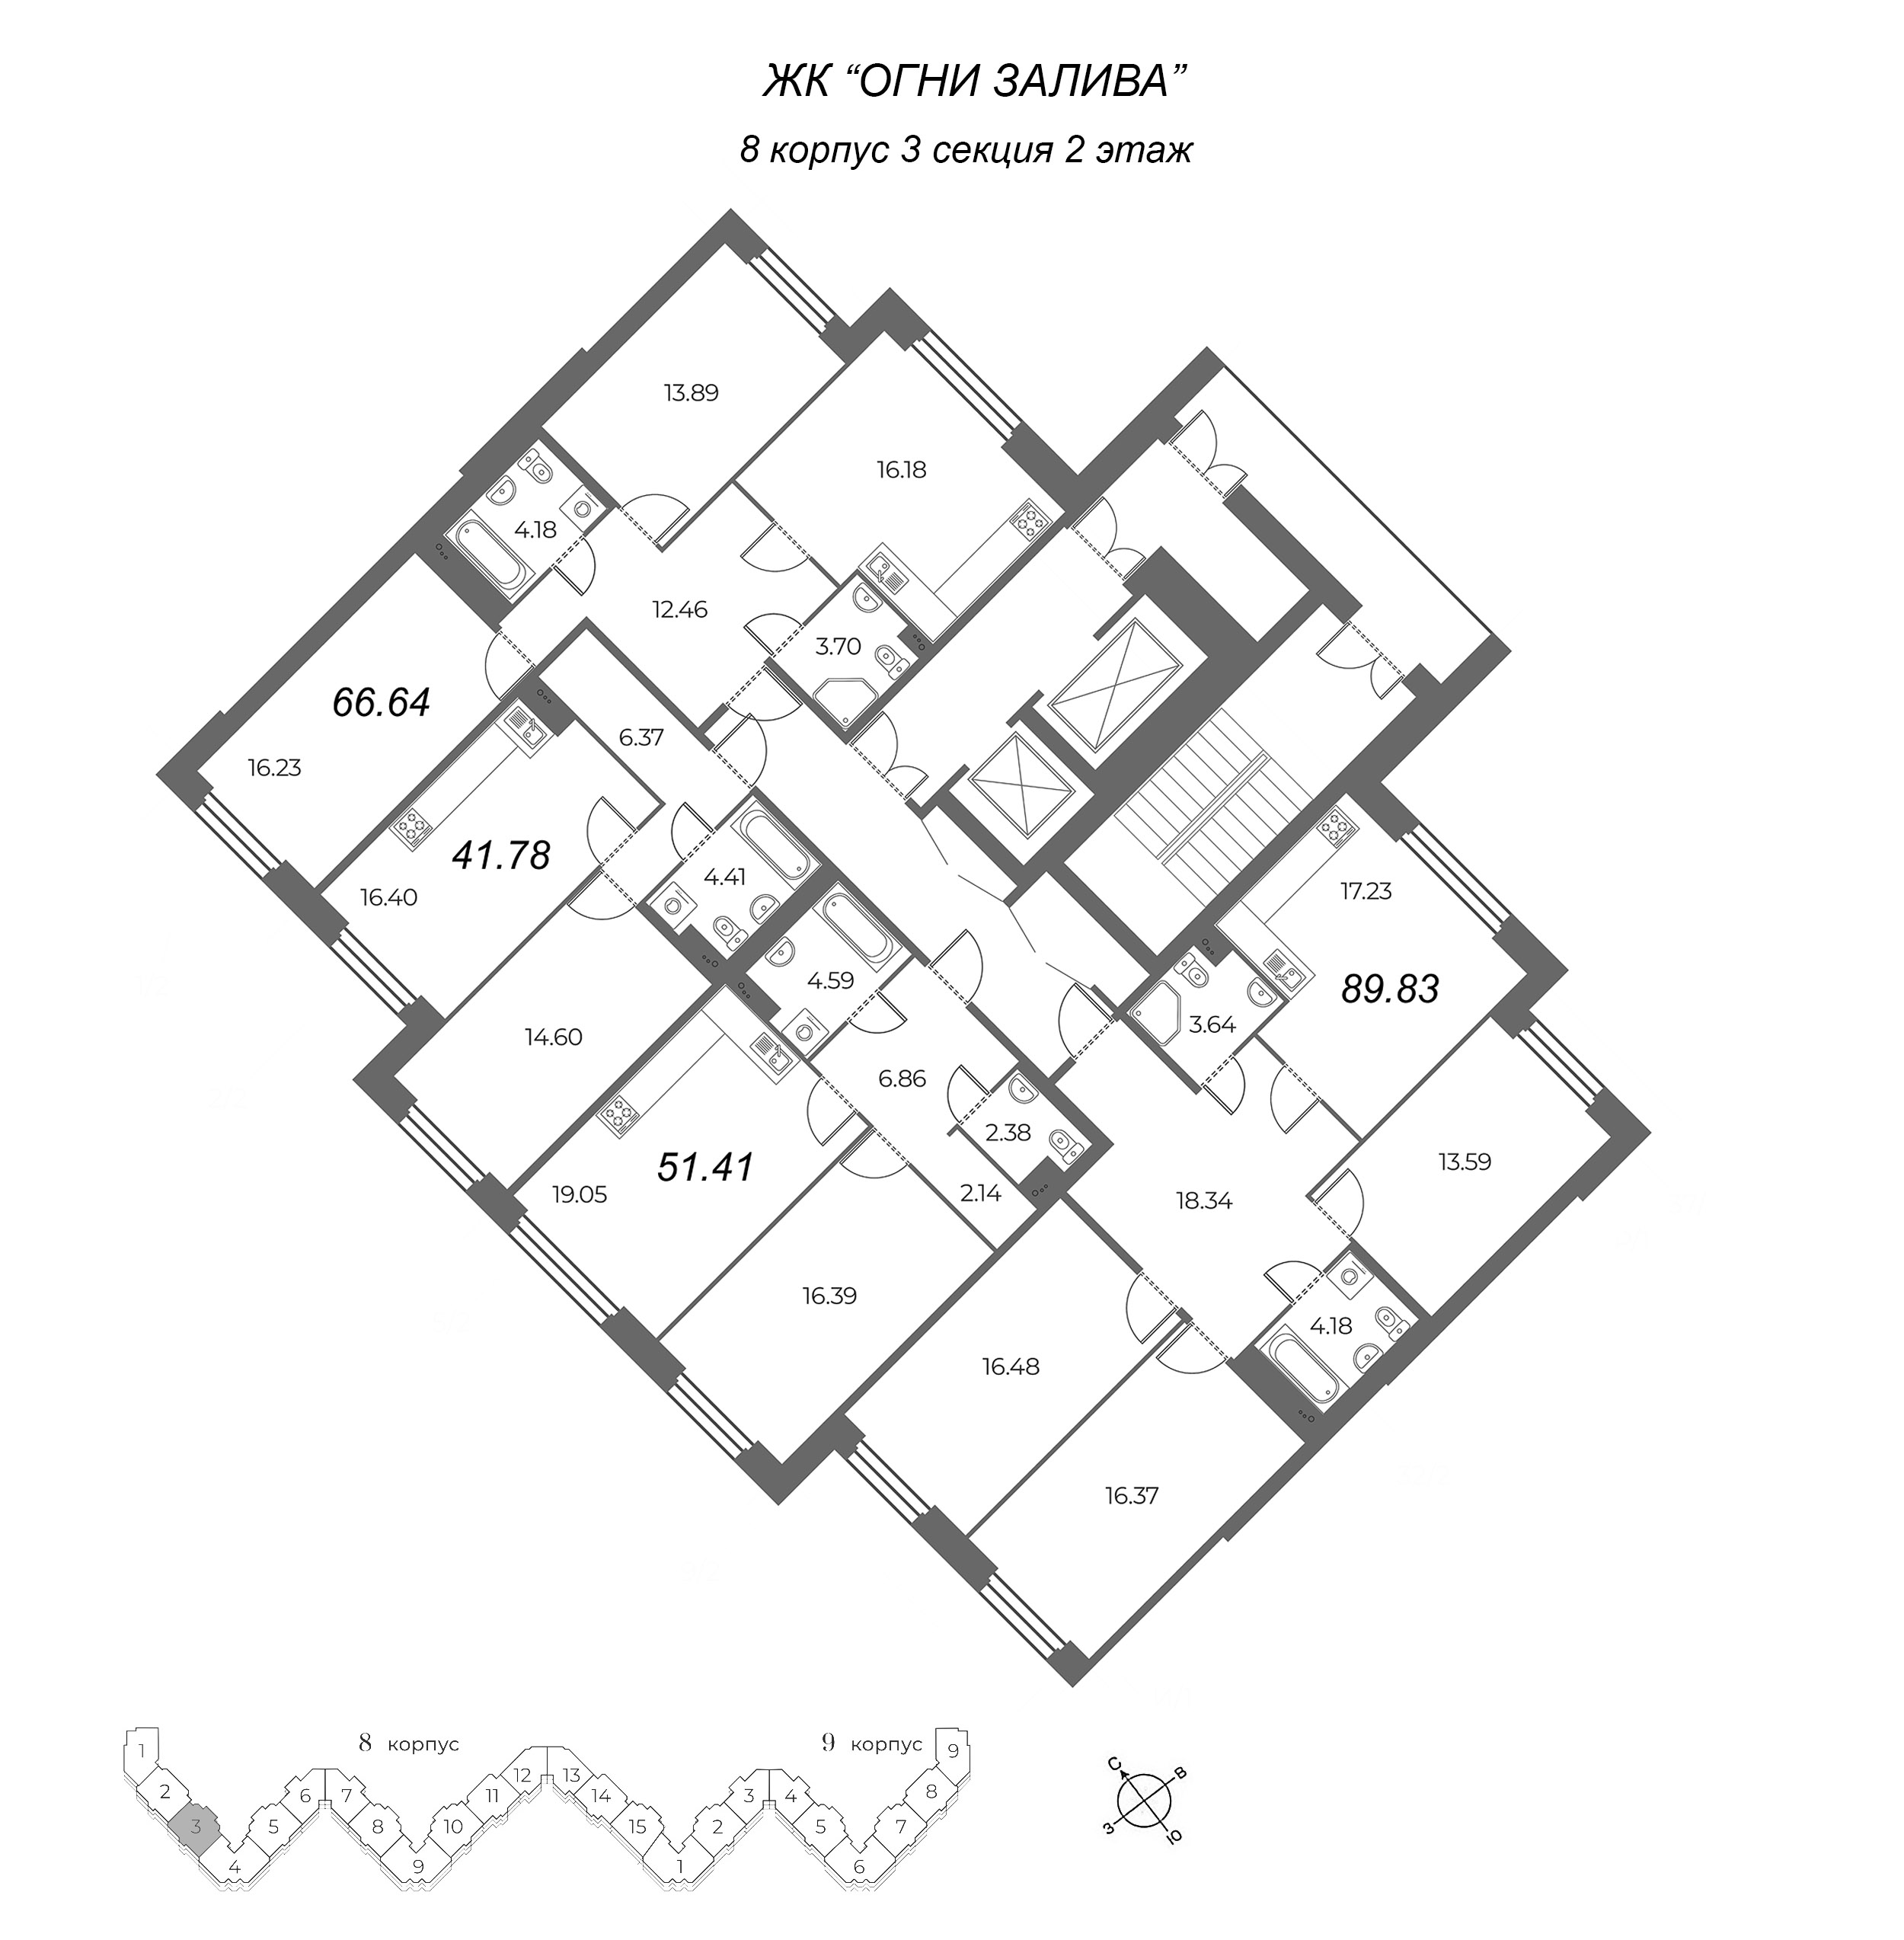 2-комнатная (Евро) квартира, 41.78 м² - планировка этажа